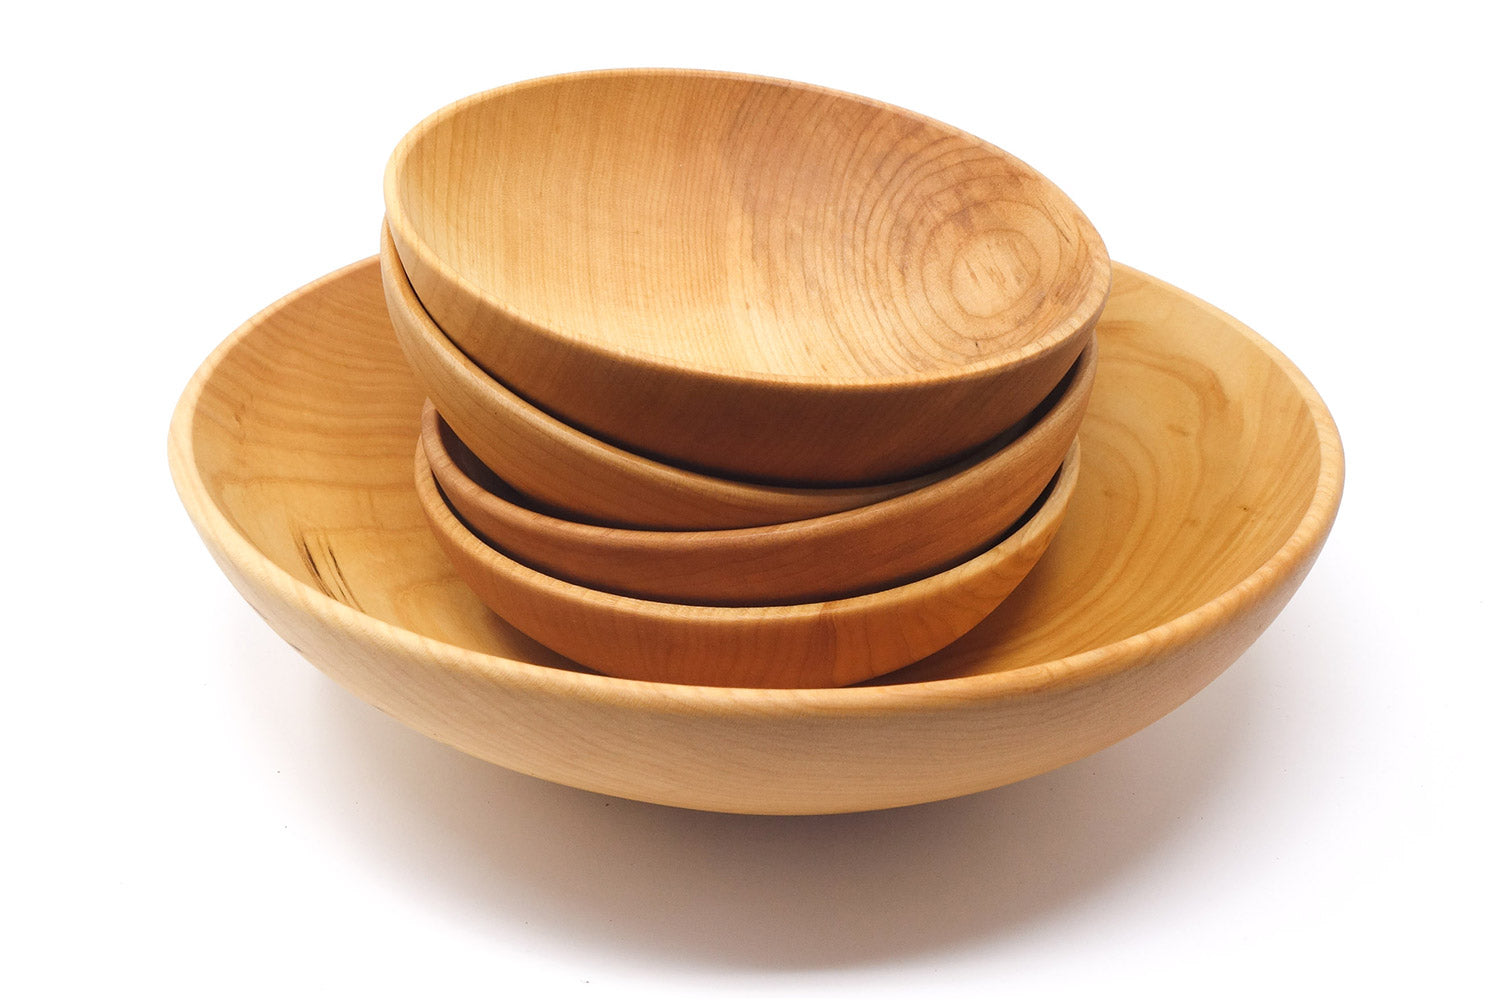 wooden salad bowl set - 5 piece hard maple